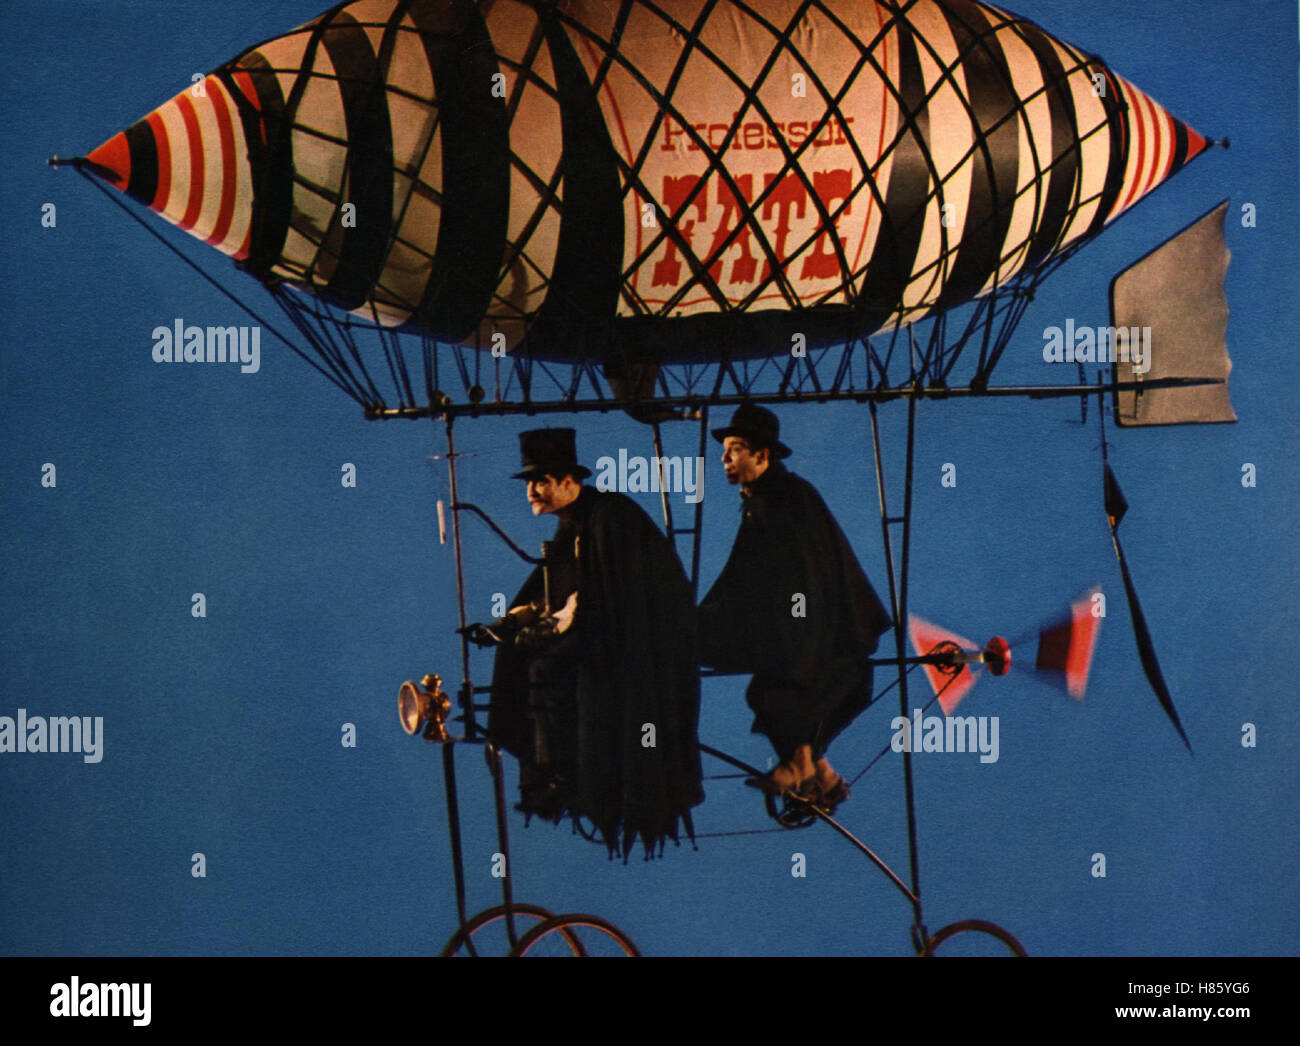 Das große) rund um die Welt, (LA GRANDE COURSE) USA 1964, Regie : Blake Edwards, Jack Lemmon, PETER FALK, Ausdruck : Himmel, Flugzeug, Ballon, Luftschiff, Fluggerät Banque D'Images